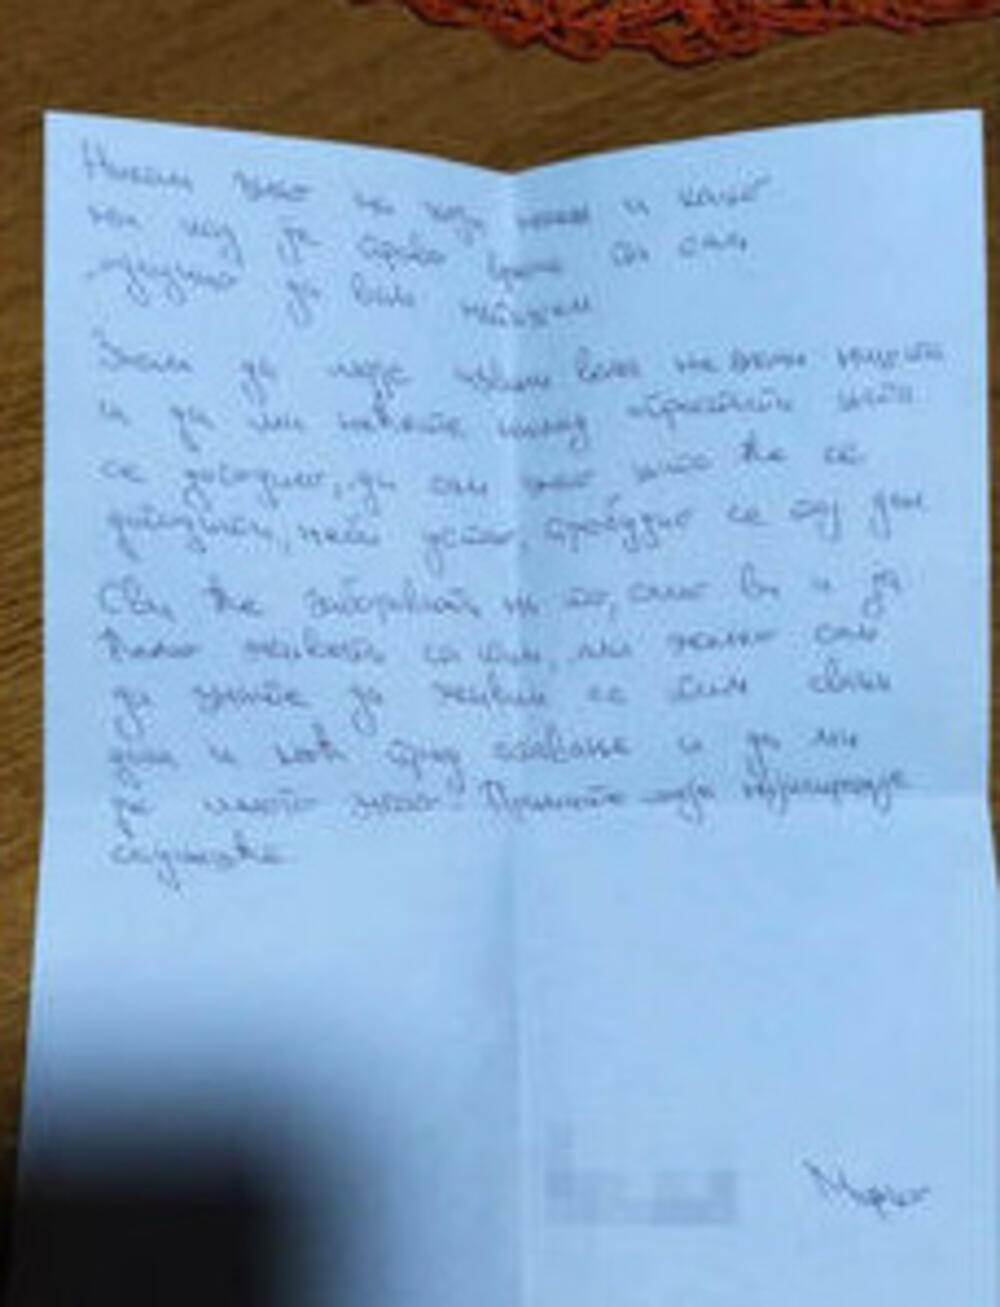 pismo koje je okrivljeni iz pritvora poslao majci žrtve